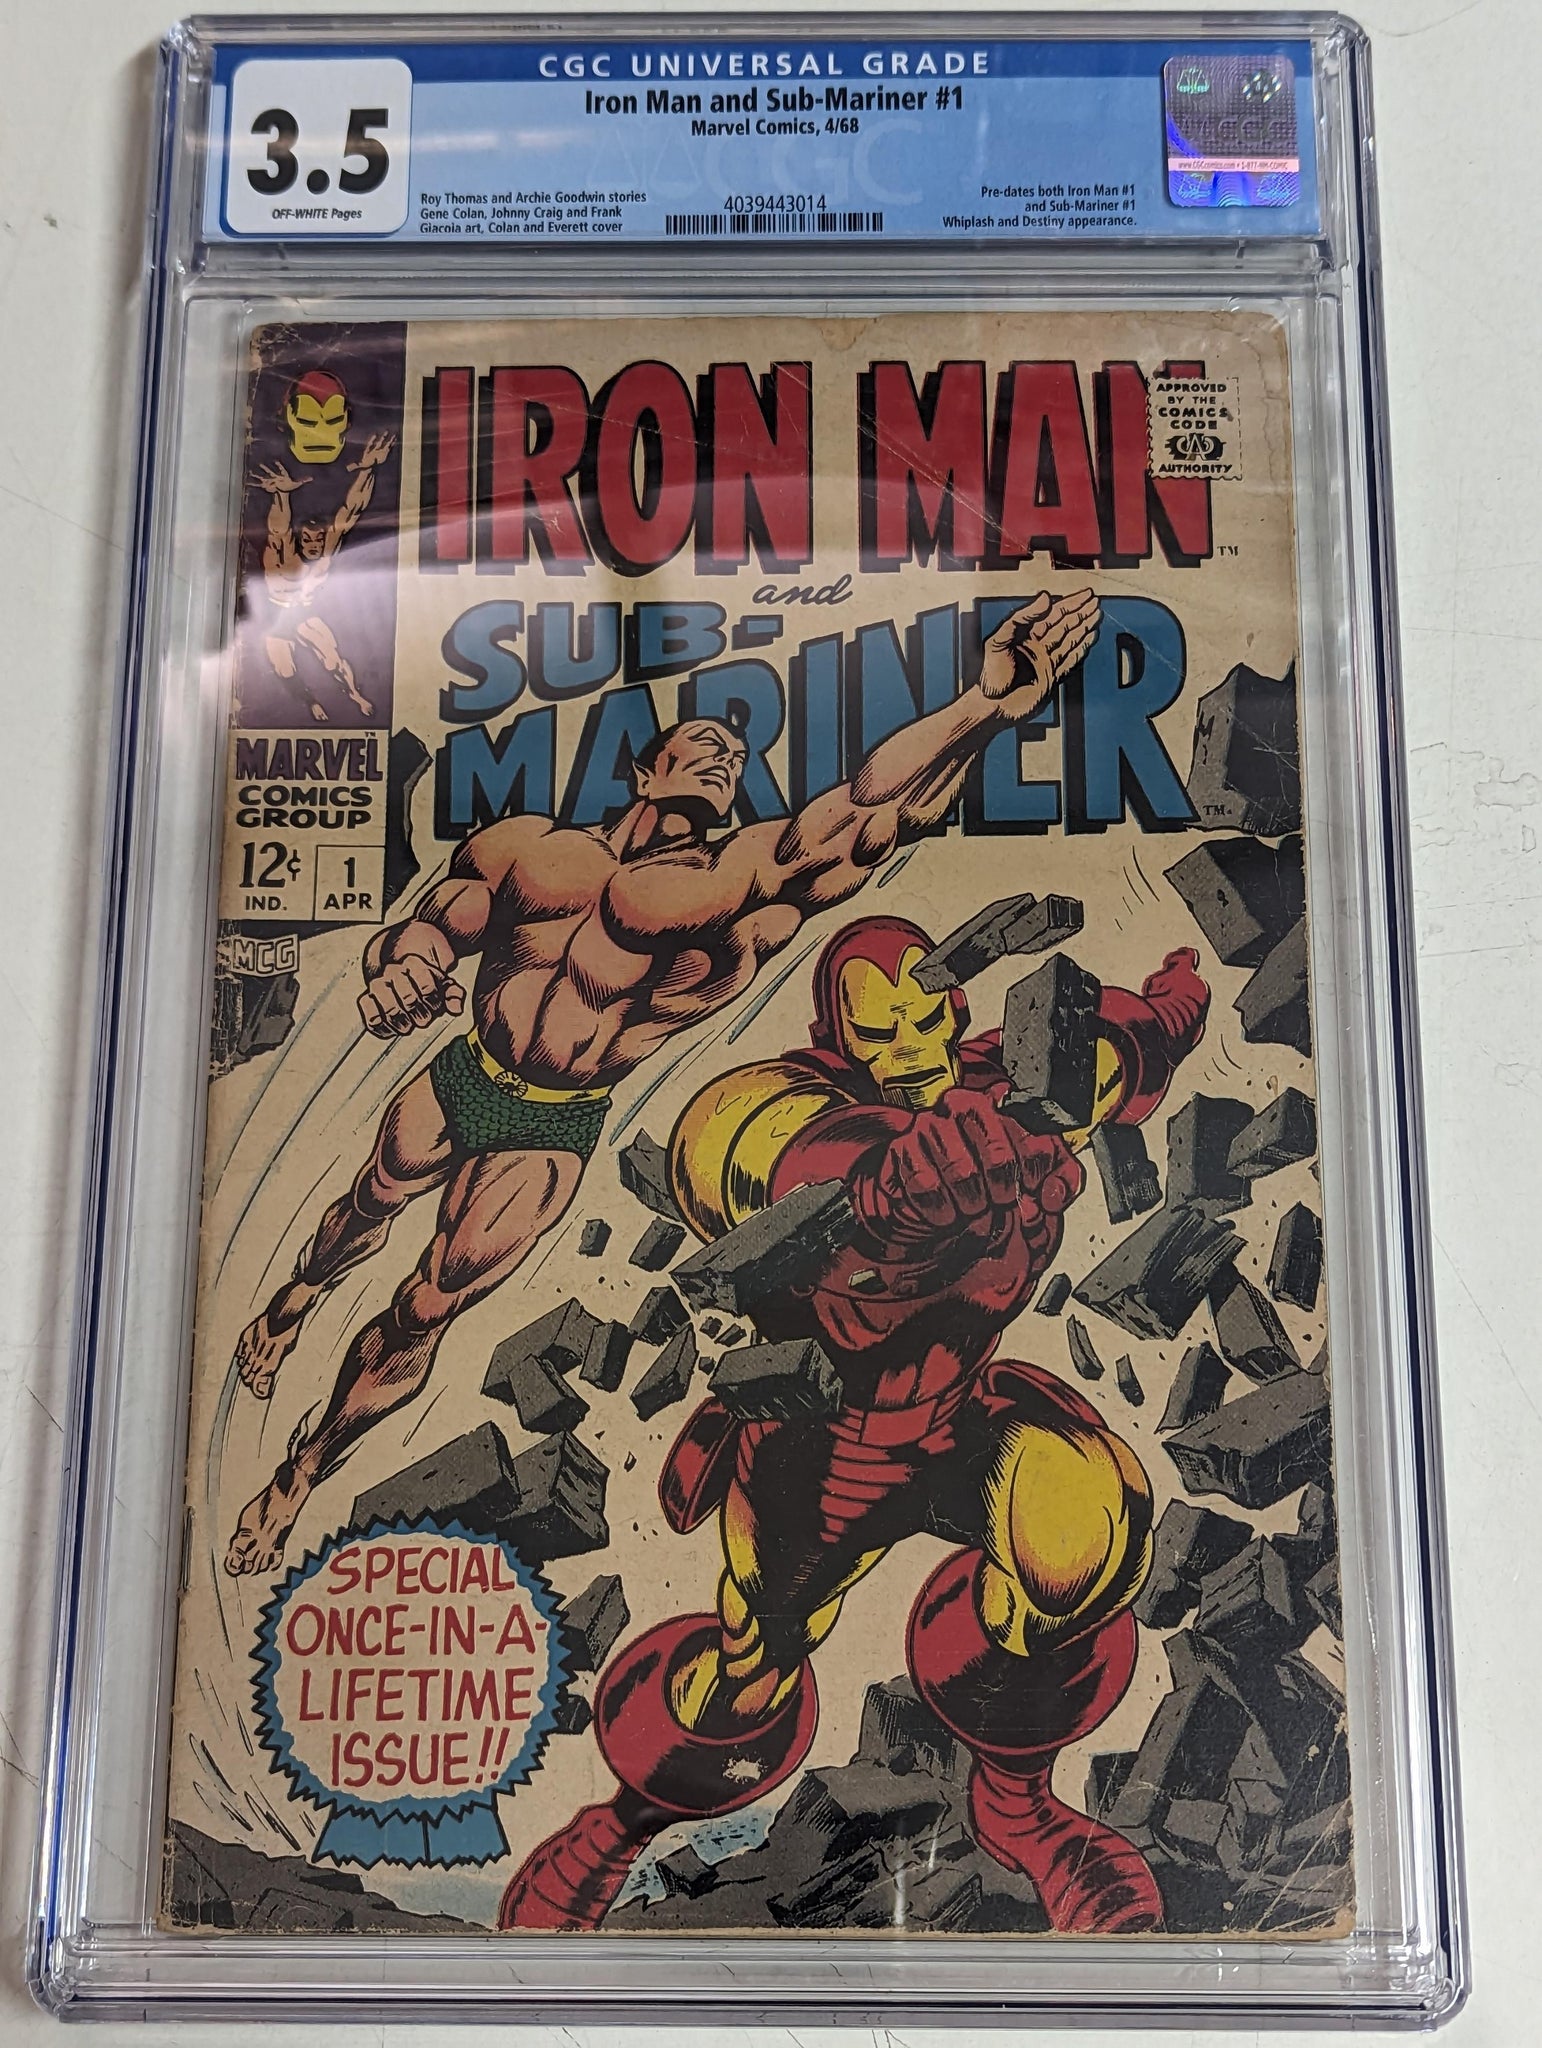 Iron Man & Sub-Mariner #1 Certified Guaranty Company (CGC) Graded 3.5 - Pre-Dates Both Iron Man #1 & Sub-Mariner #1